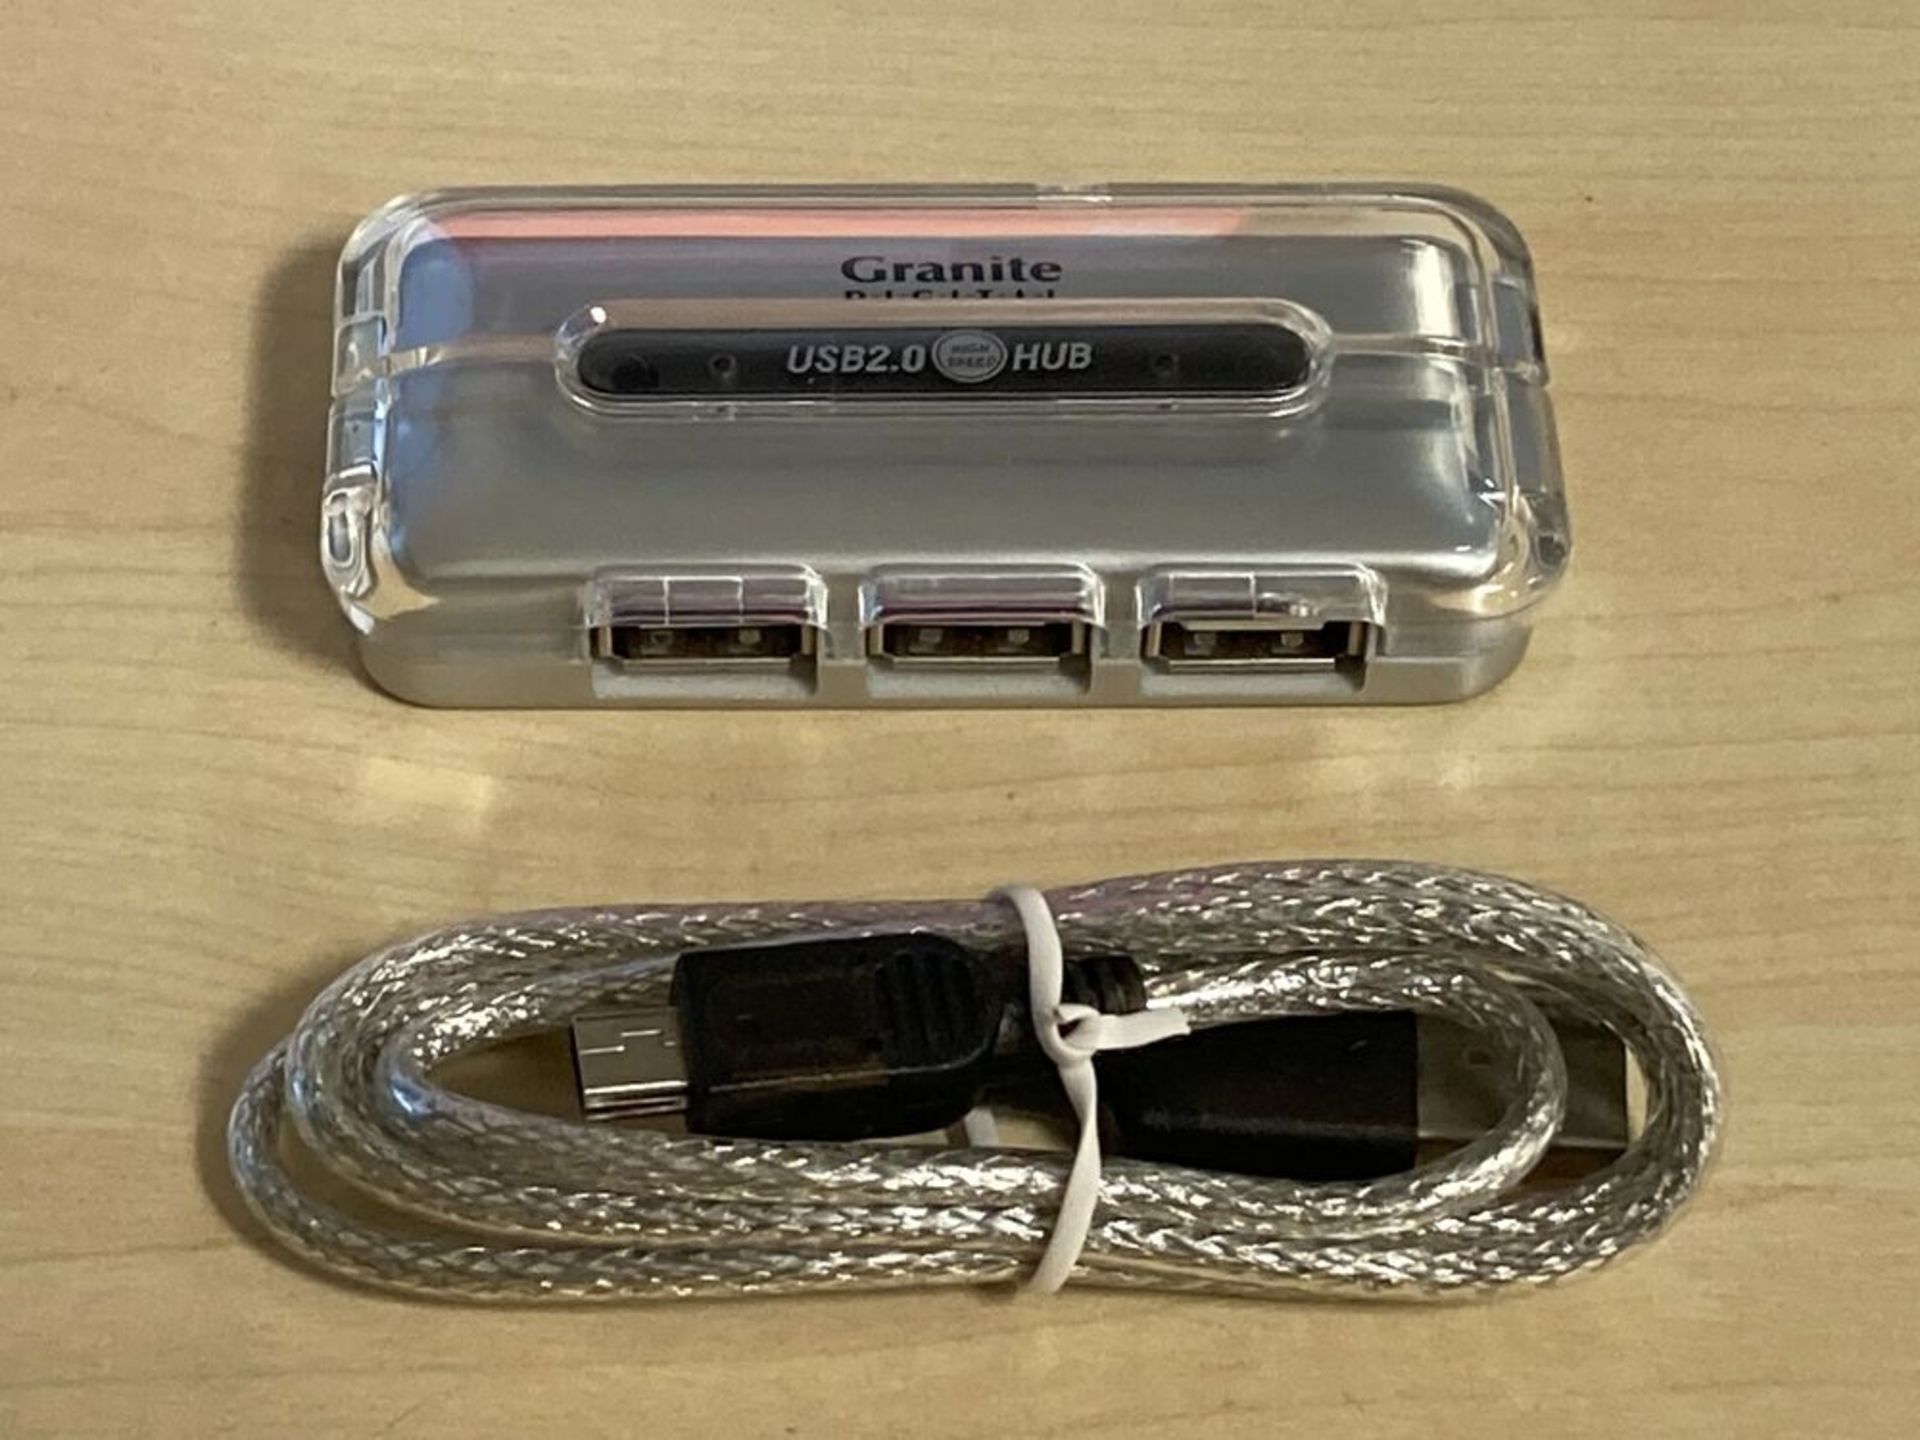 BOX OF 30 - Granite Digital 4-Port USB 2.0 Hub with USB A to Mini B Cable 1156 - Image 5 of 5